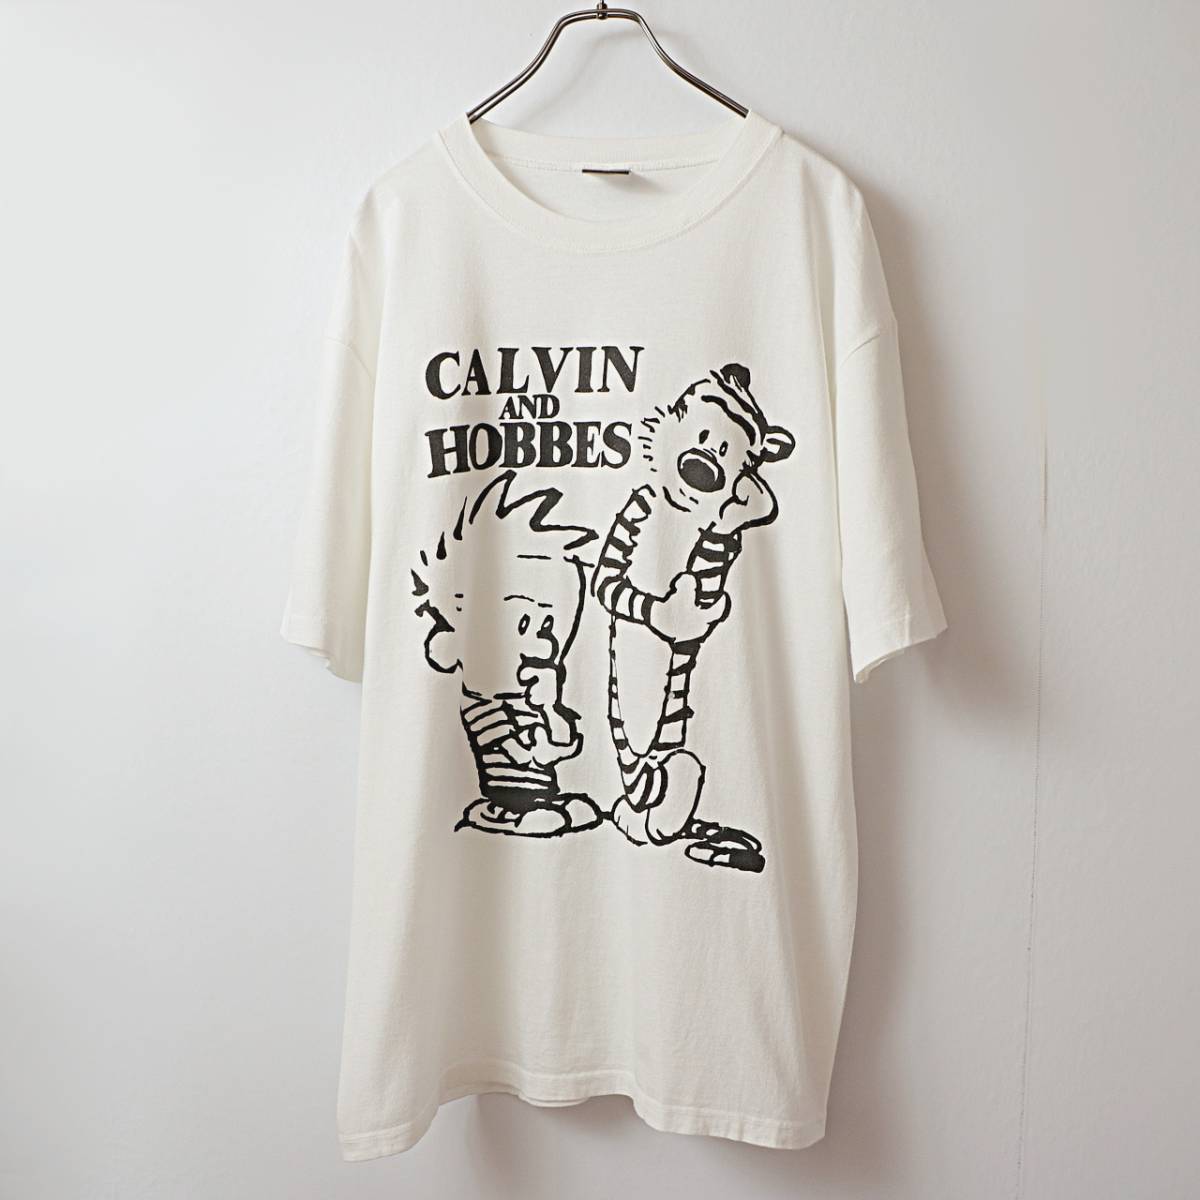 90s Calvin and Hobbes カルビンとホッブス キャラクター Tシャツ 古着 used